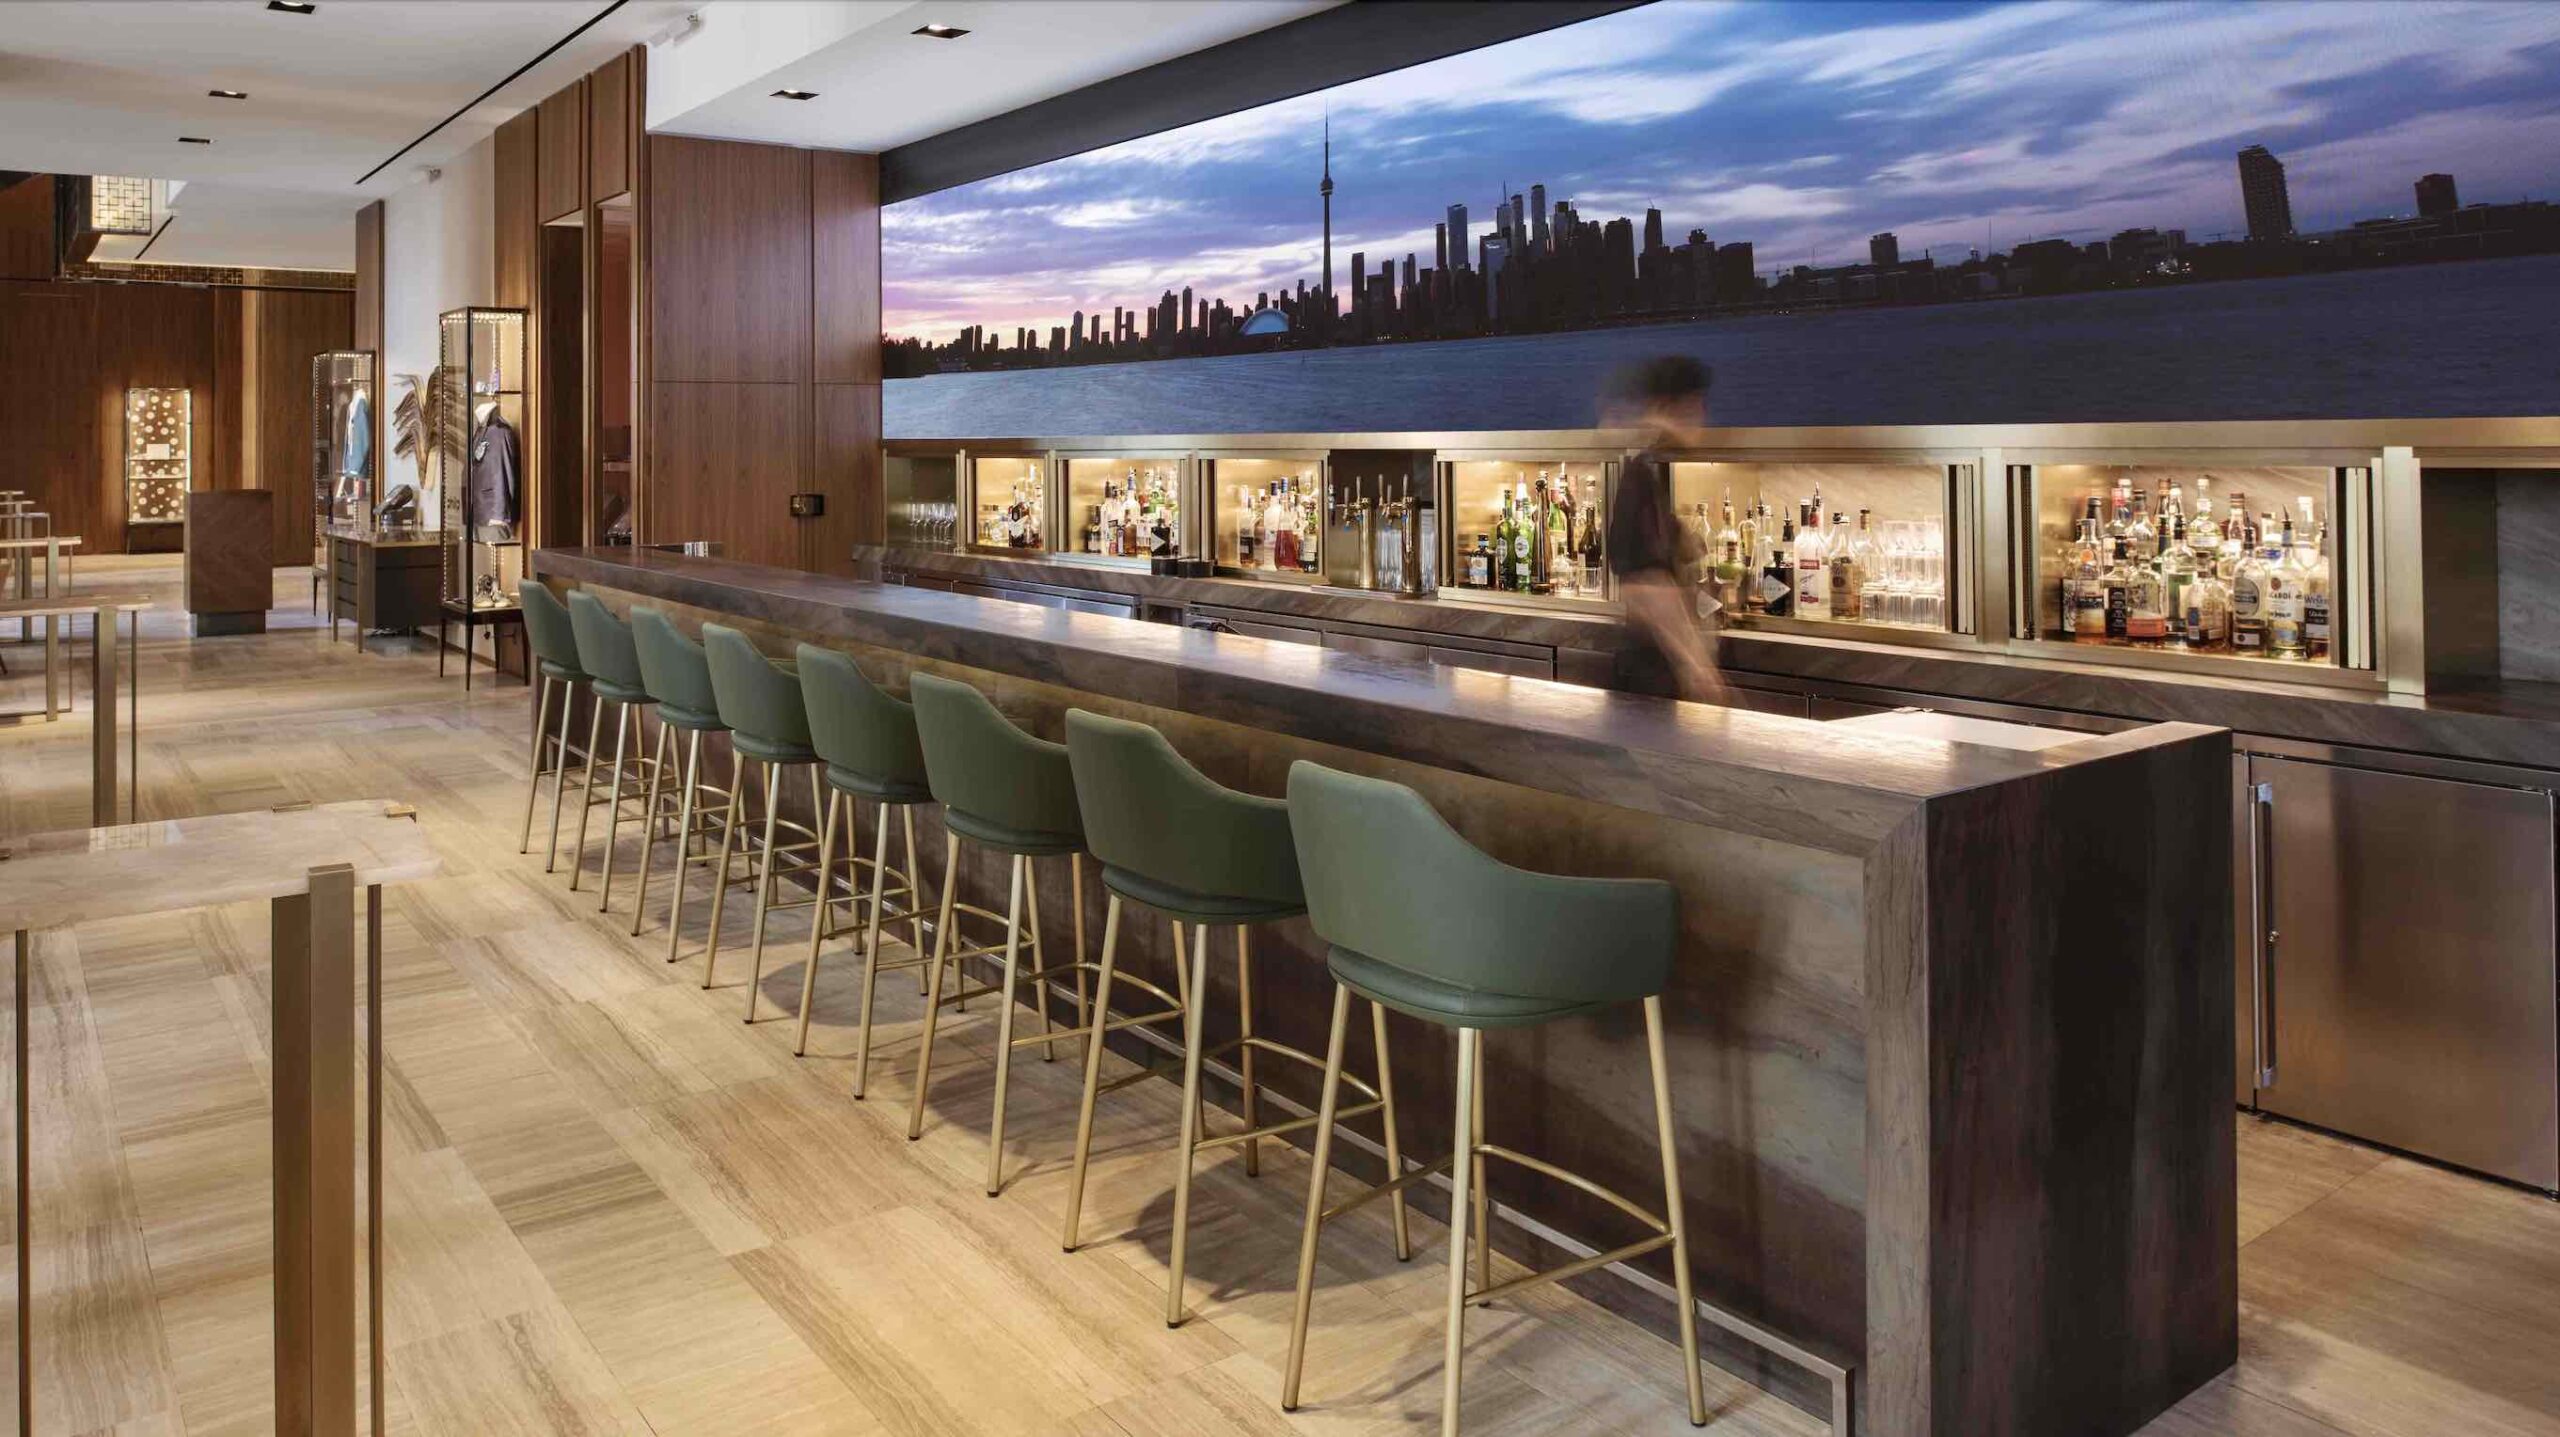 Four Seasons Toronto DBar interior with bar is one of the best toronto hotel bars